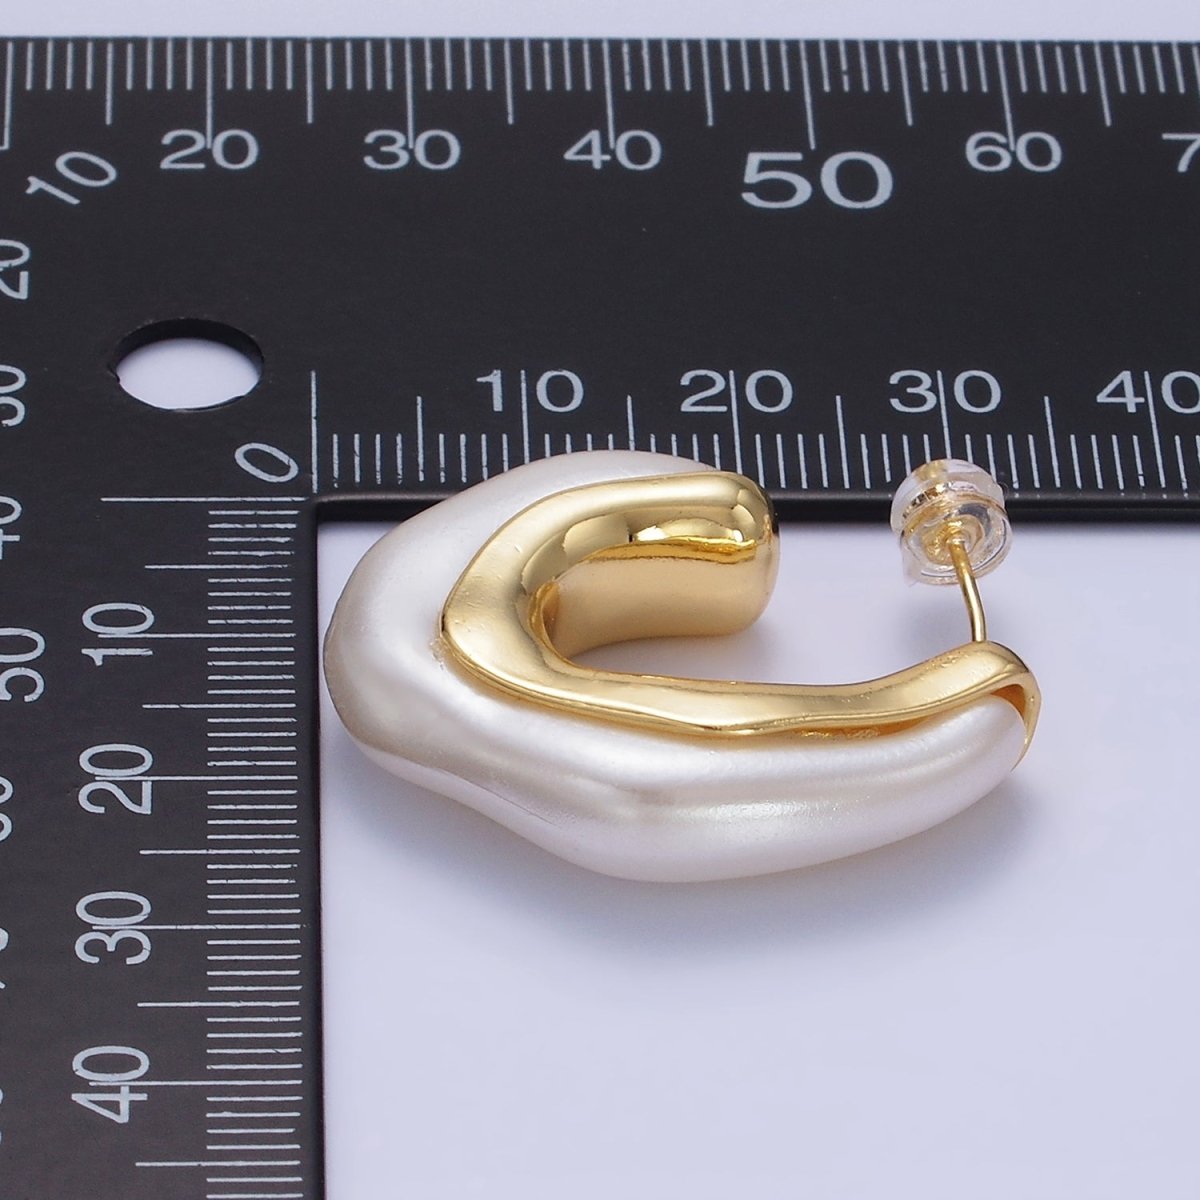 24K Gold Filled 30mm Shell Pearl Geometric J-Shaped Hoop Earrings | Q193 - DLUXCA